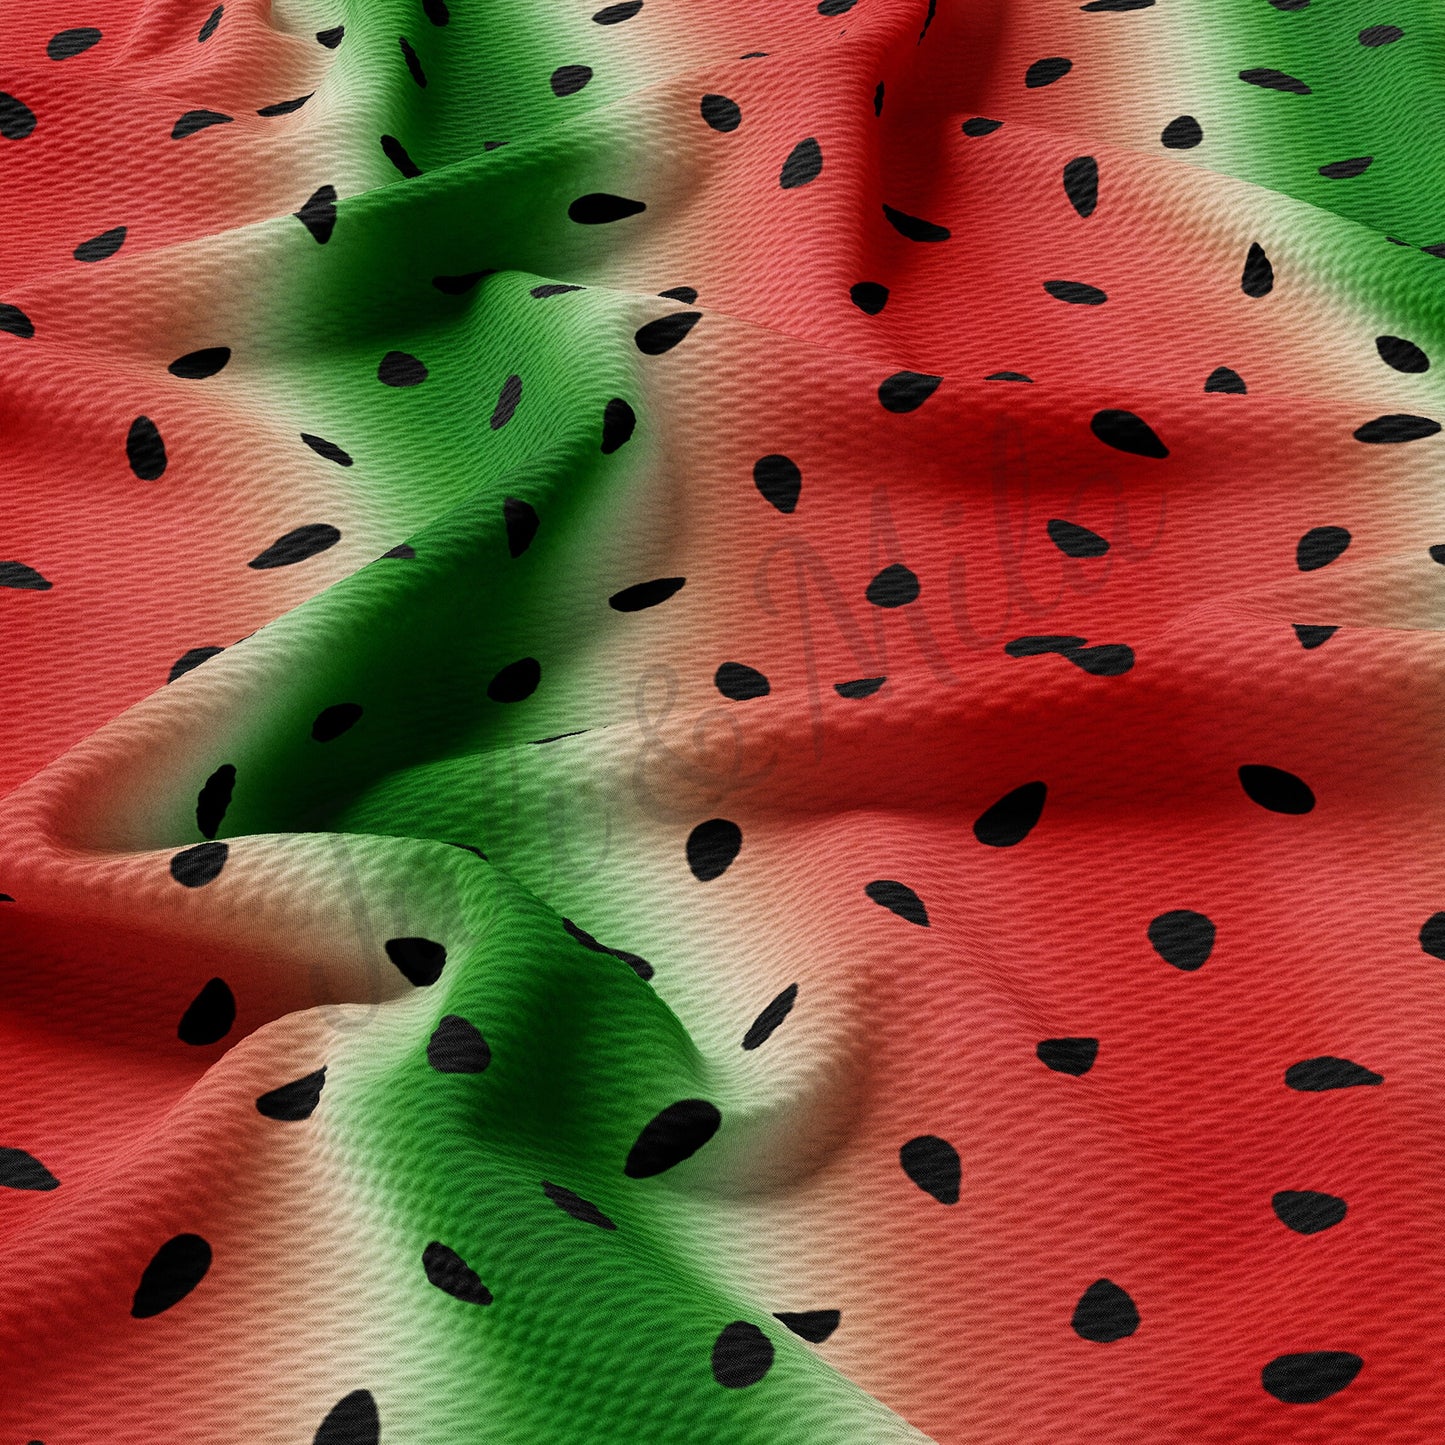 Watermelon Seeds Bullet Fabric AA239